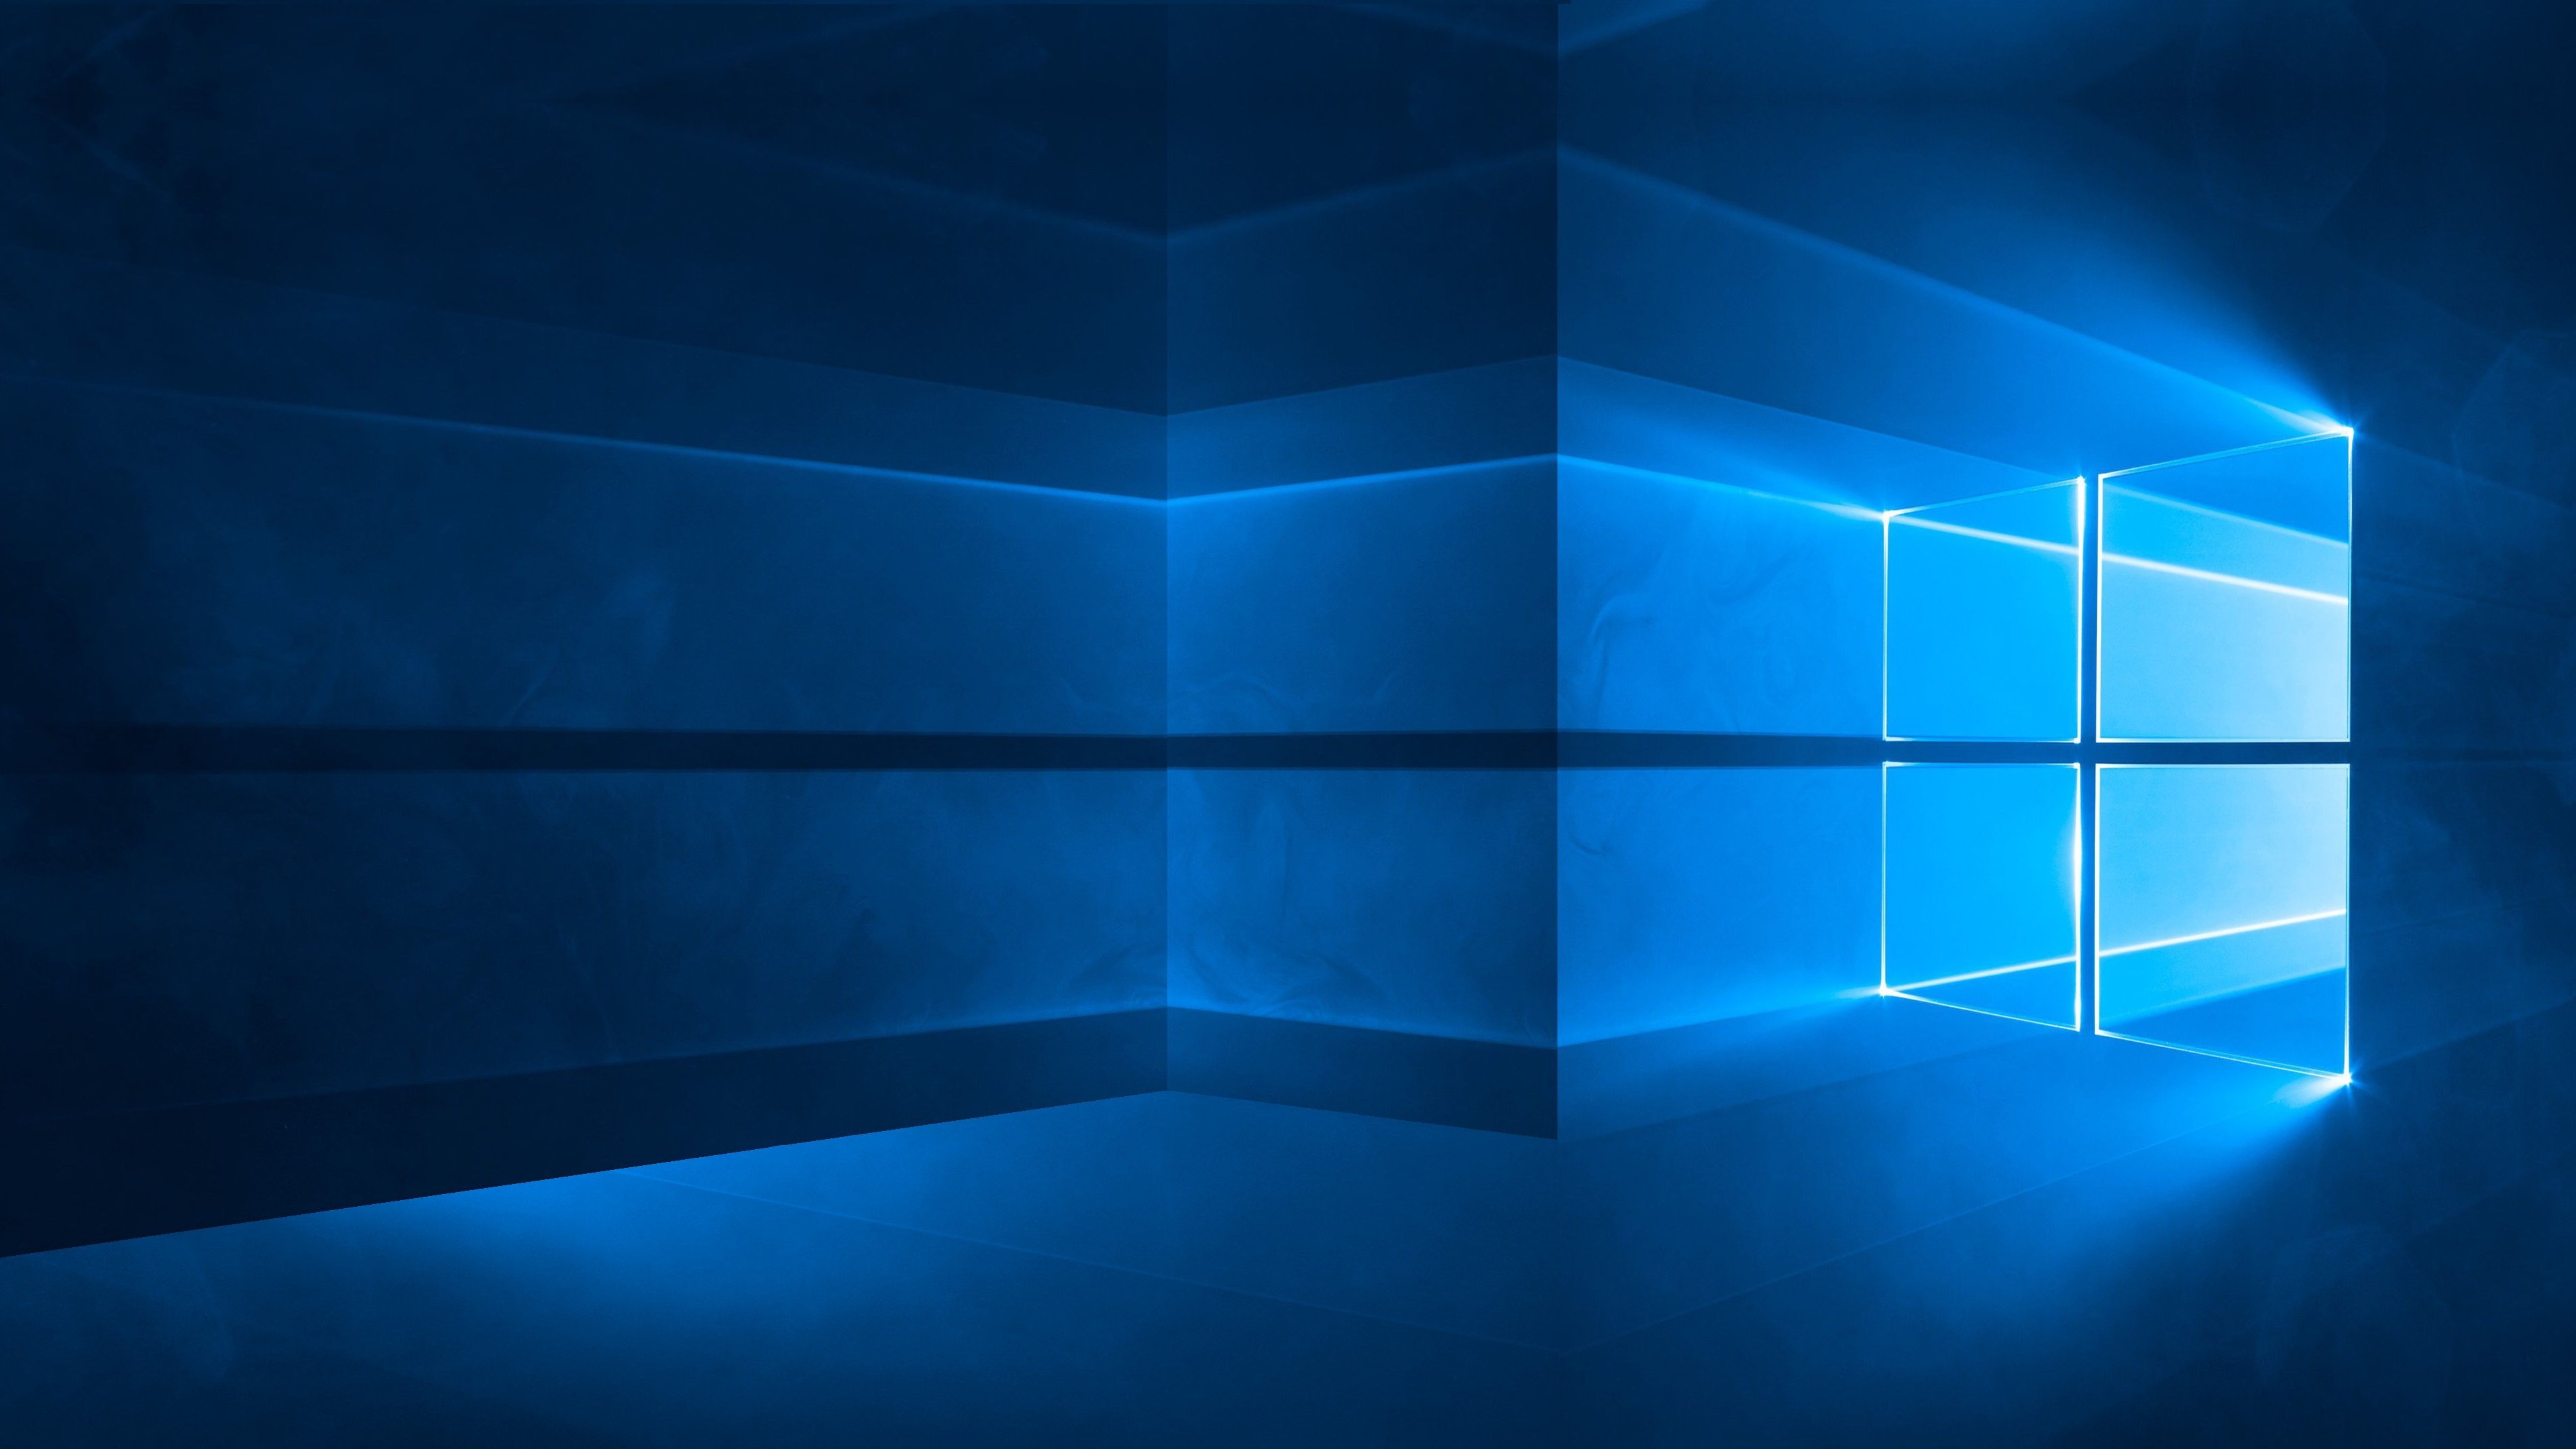 Windows 10 Redstone 3